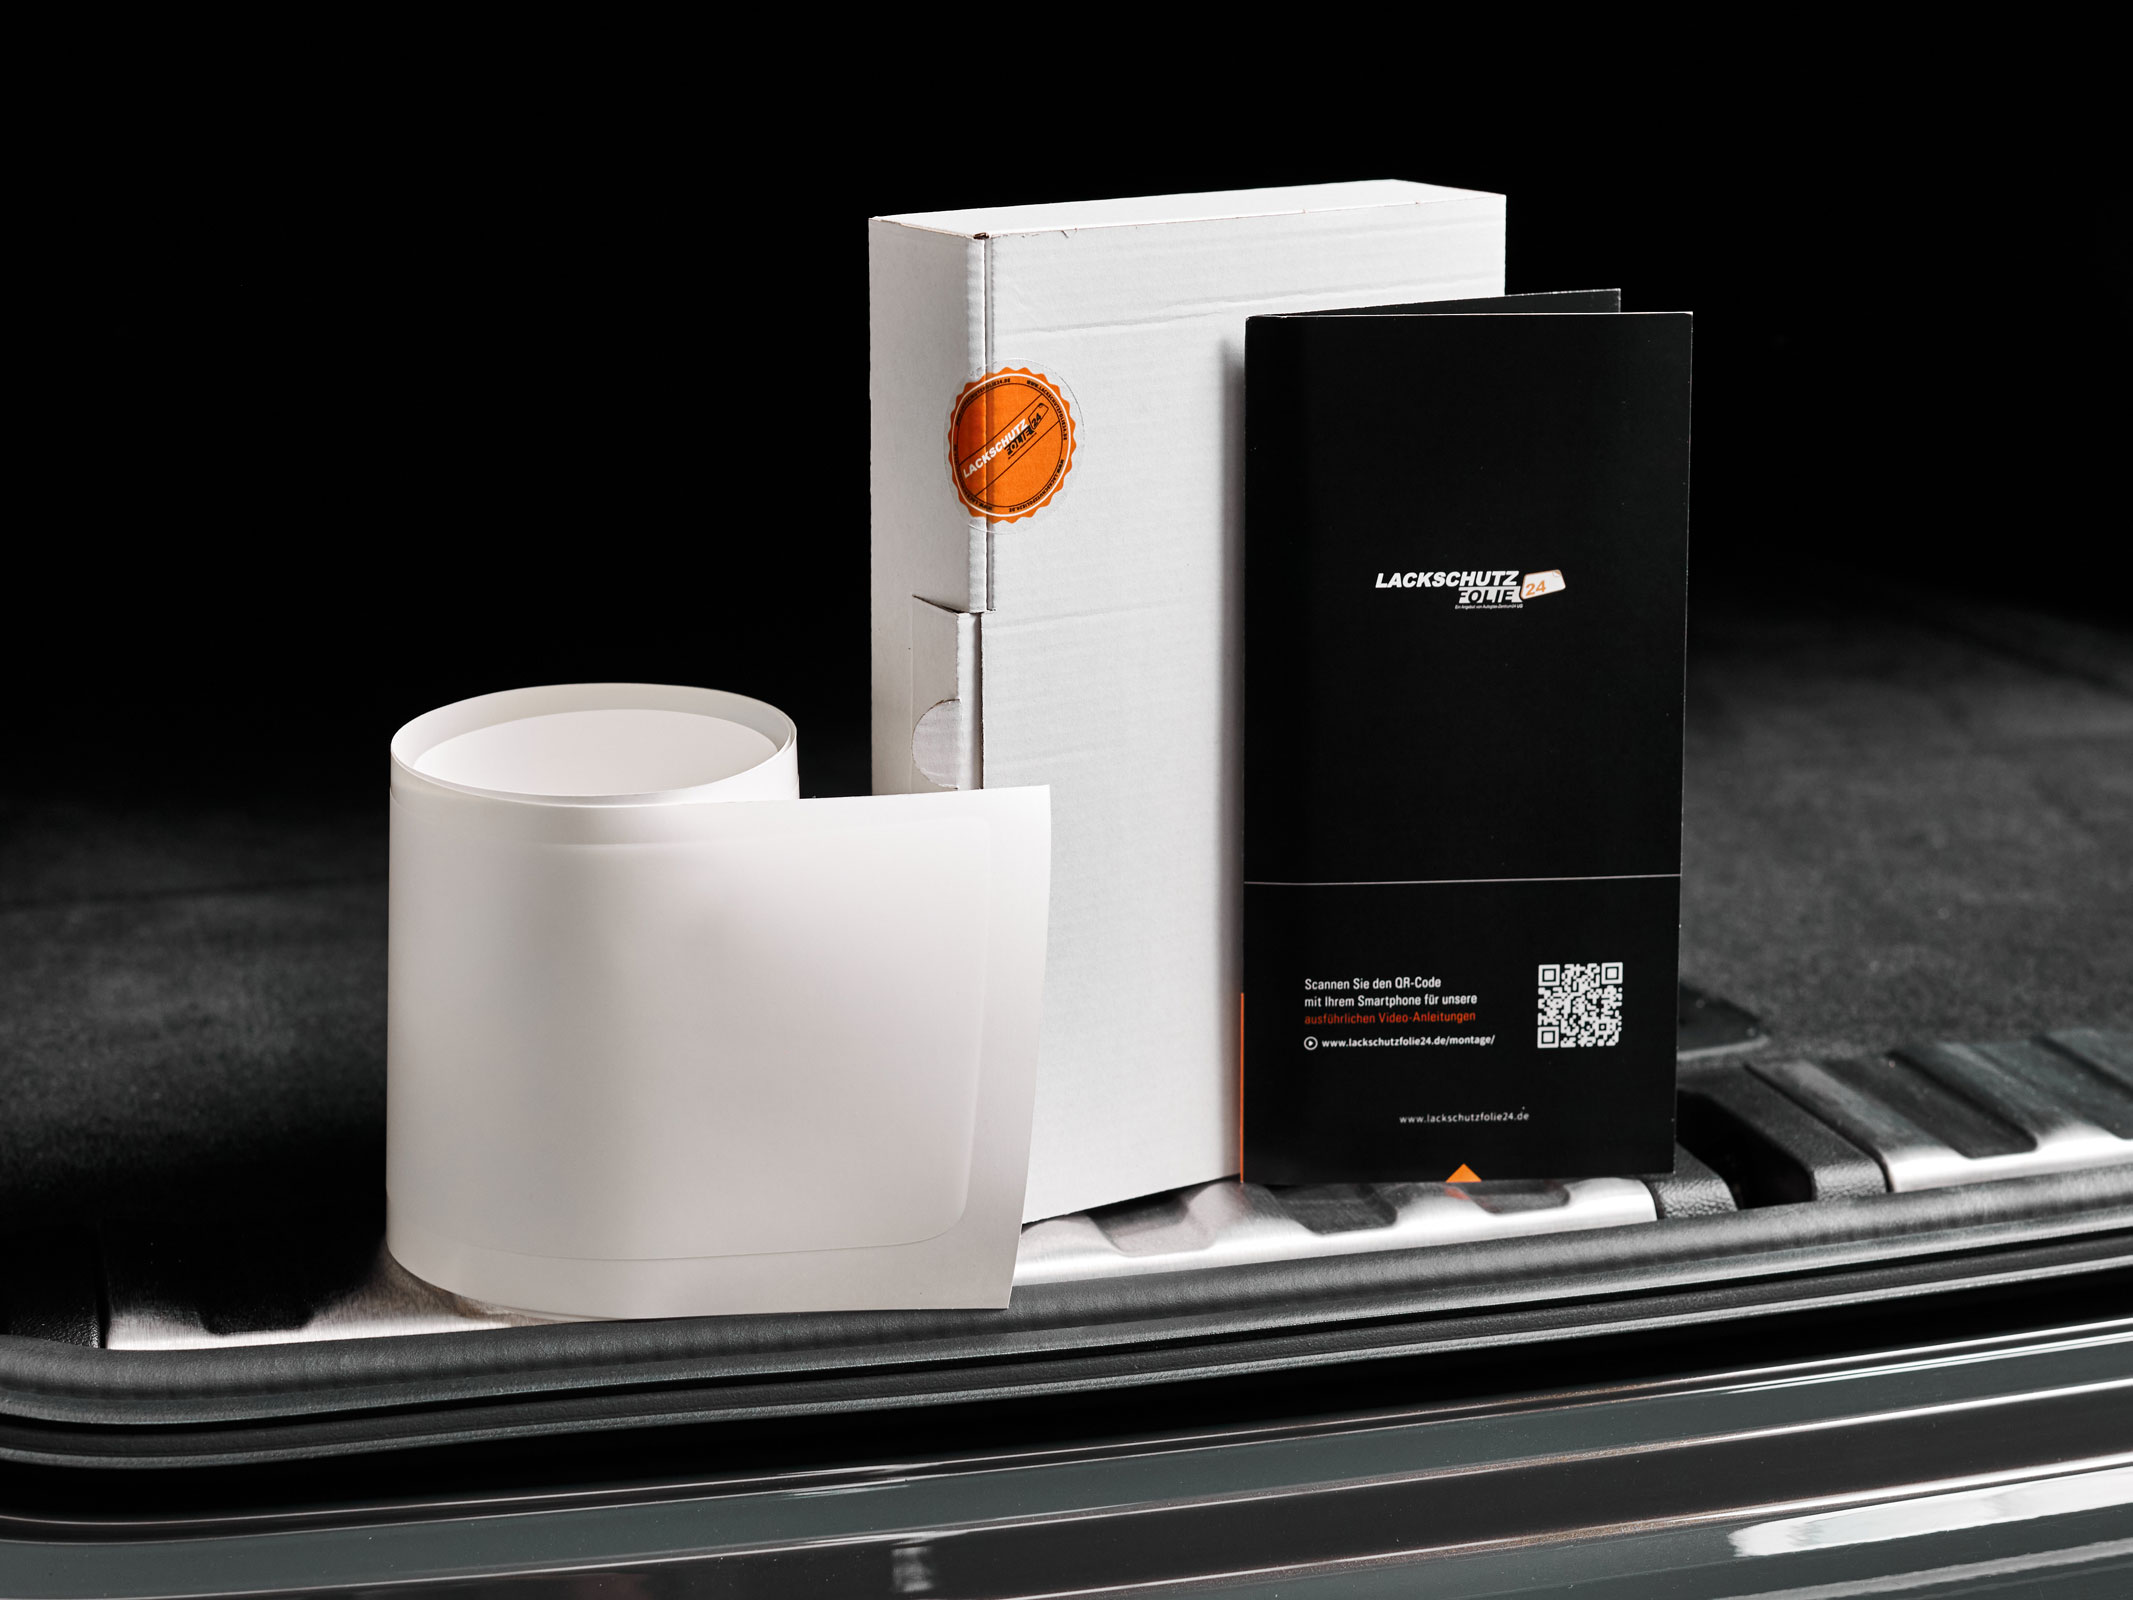 Ladekantenschutzfolie - Transparent Glatt MATT 110 µm stark  für DS Automobiles DS 3 BJ 2010-2019